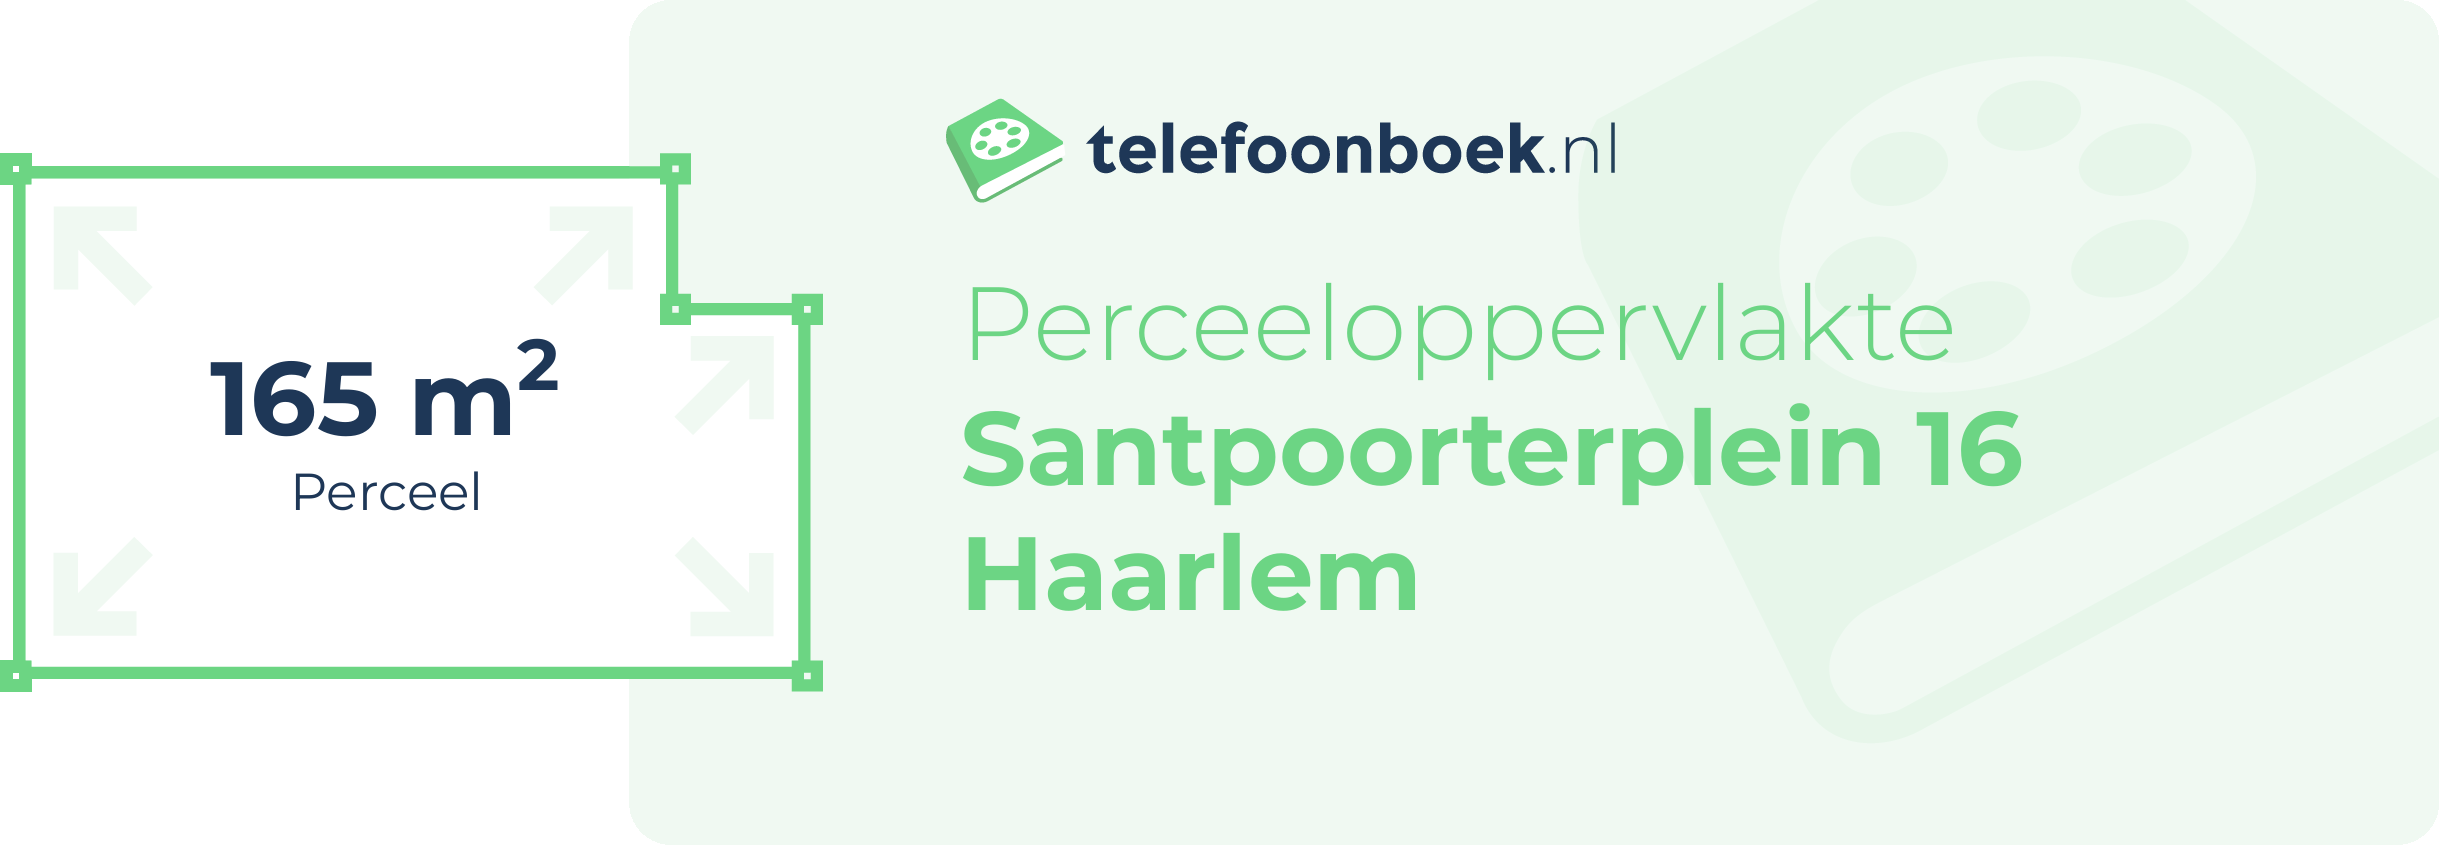 Perceeloppervlakte Santpoorterplein 16 Haarlem